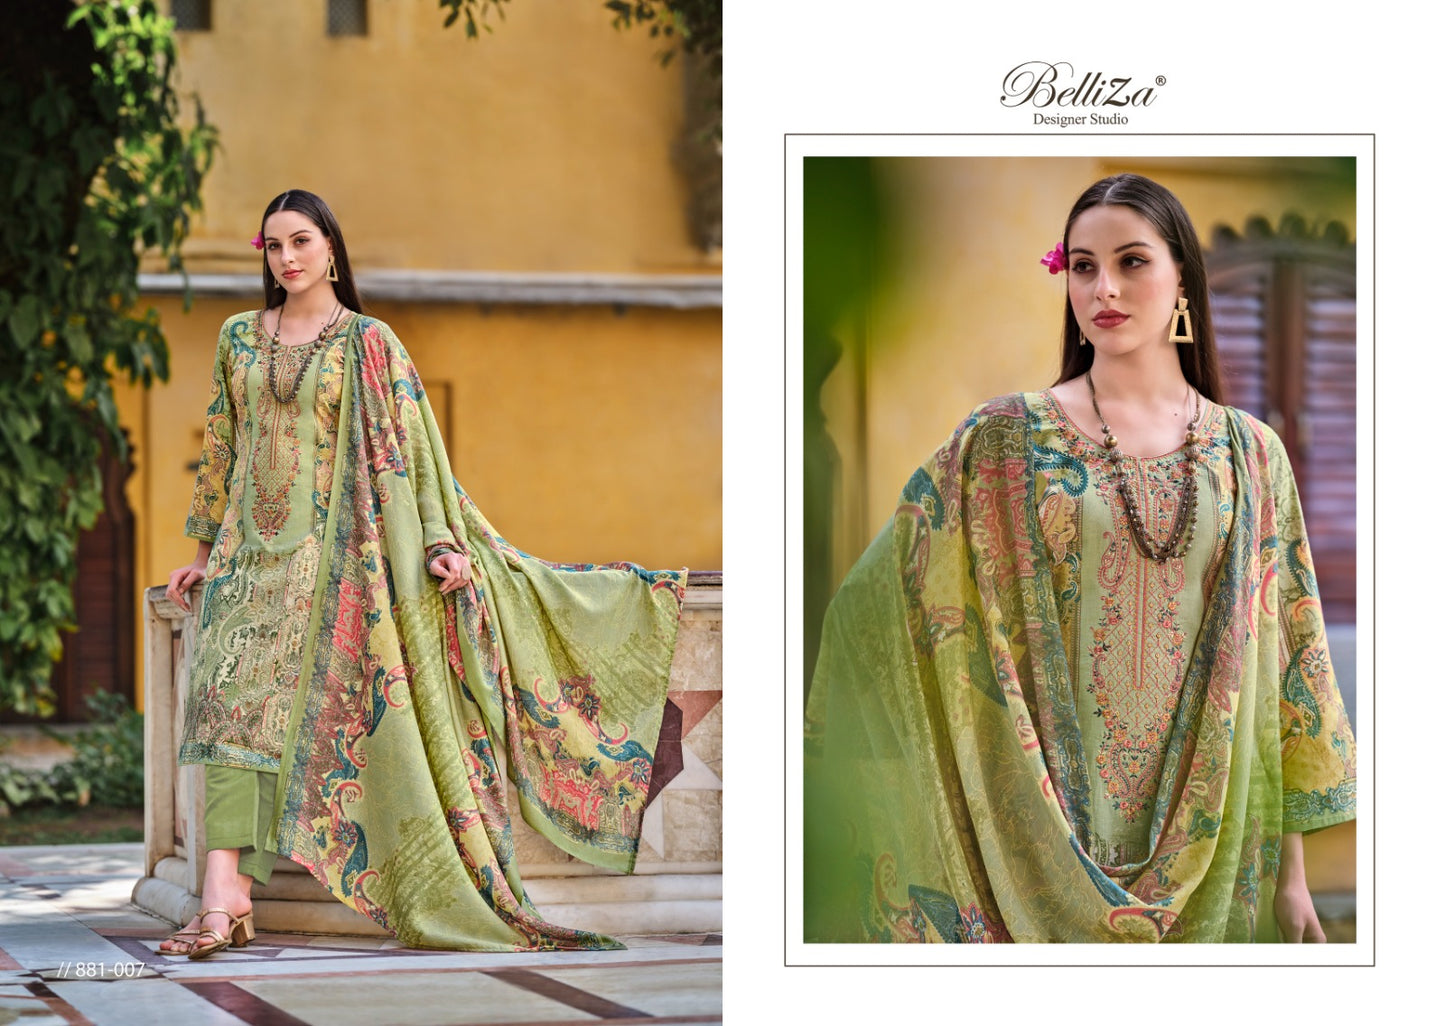 Naira Vol 35 Belliza Designer Studio Cotton Karachi Salwar Suits